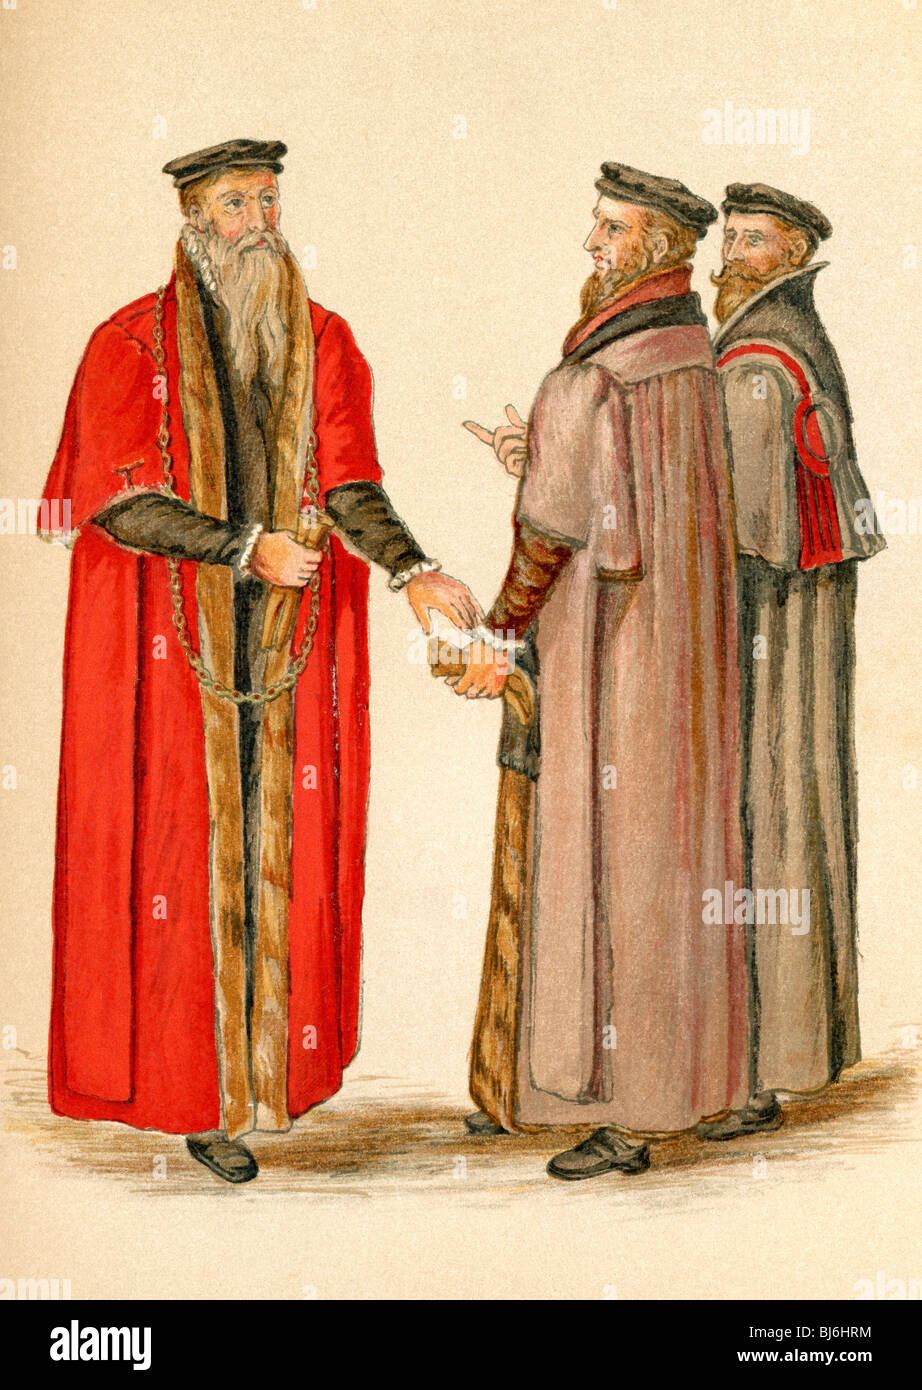 Lord Mayor and Aldermen of London during the Elizabethan era. Stock Photo